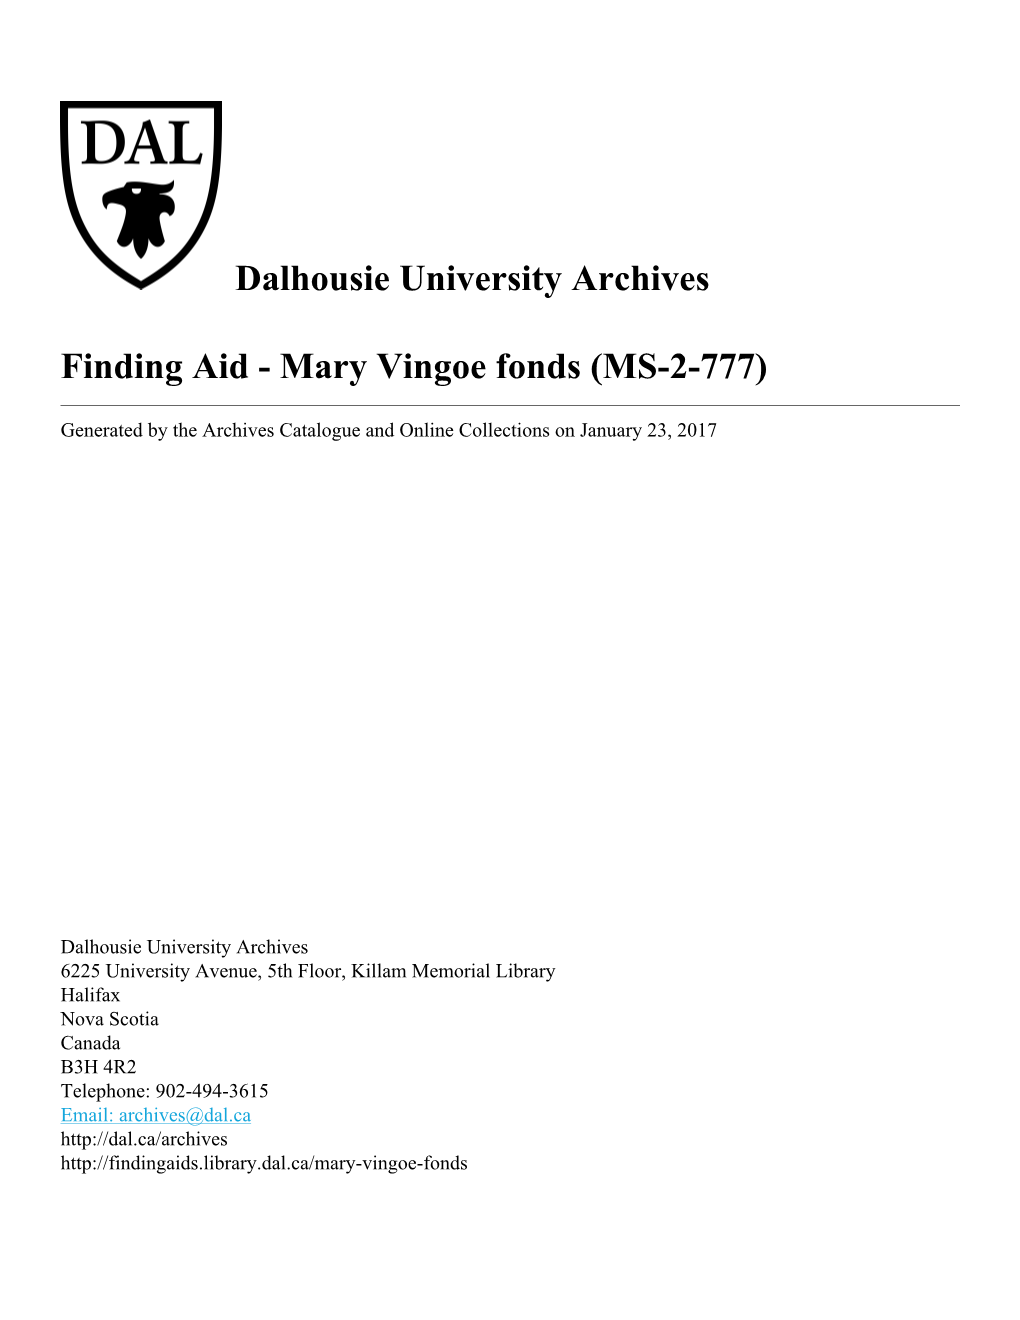 Mary Vingoe Fonds (MS-2-777)